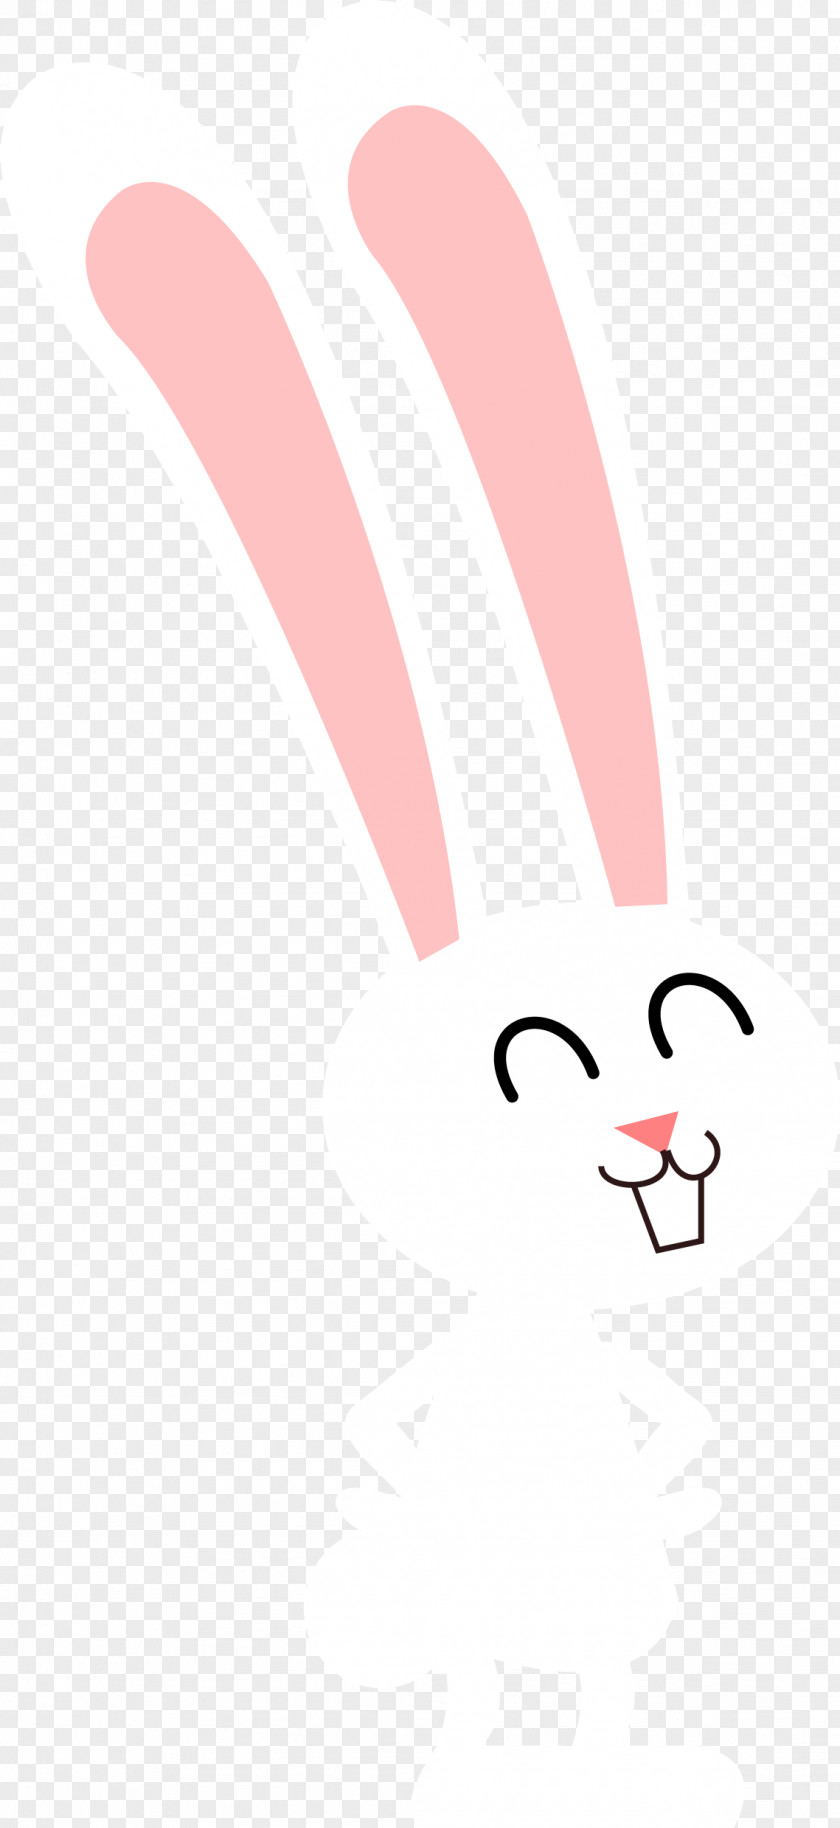 Bunny Rabbit Paper Text Illustration PNG